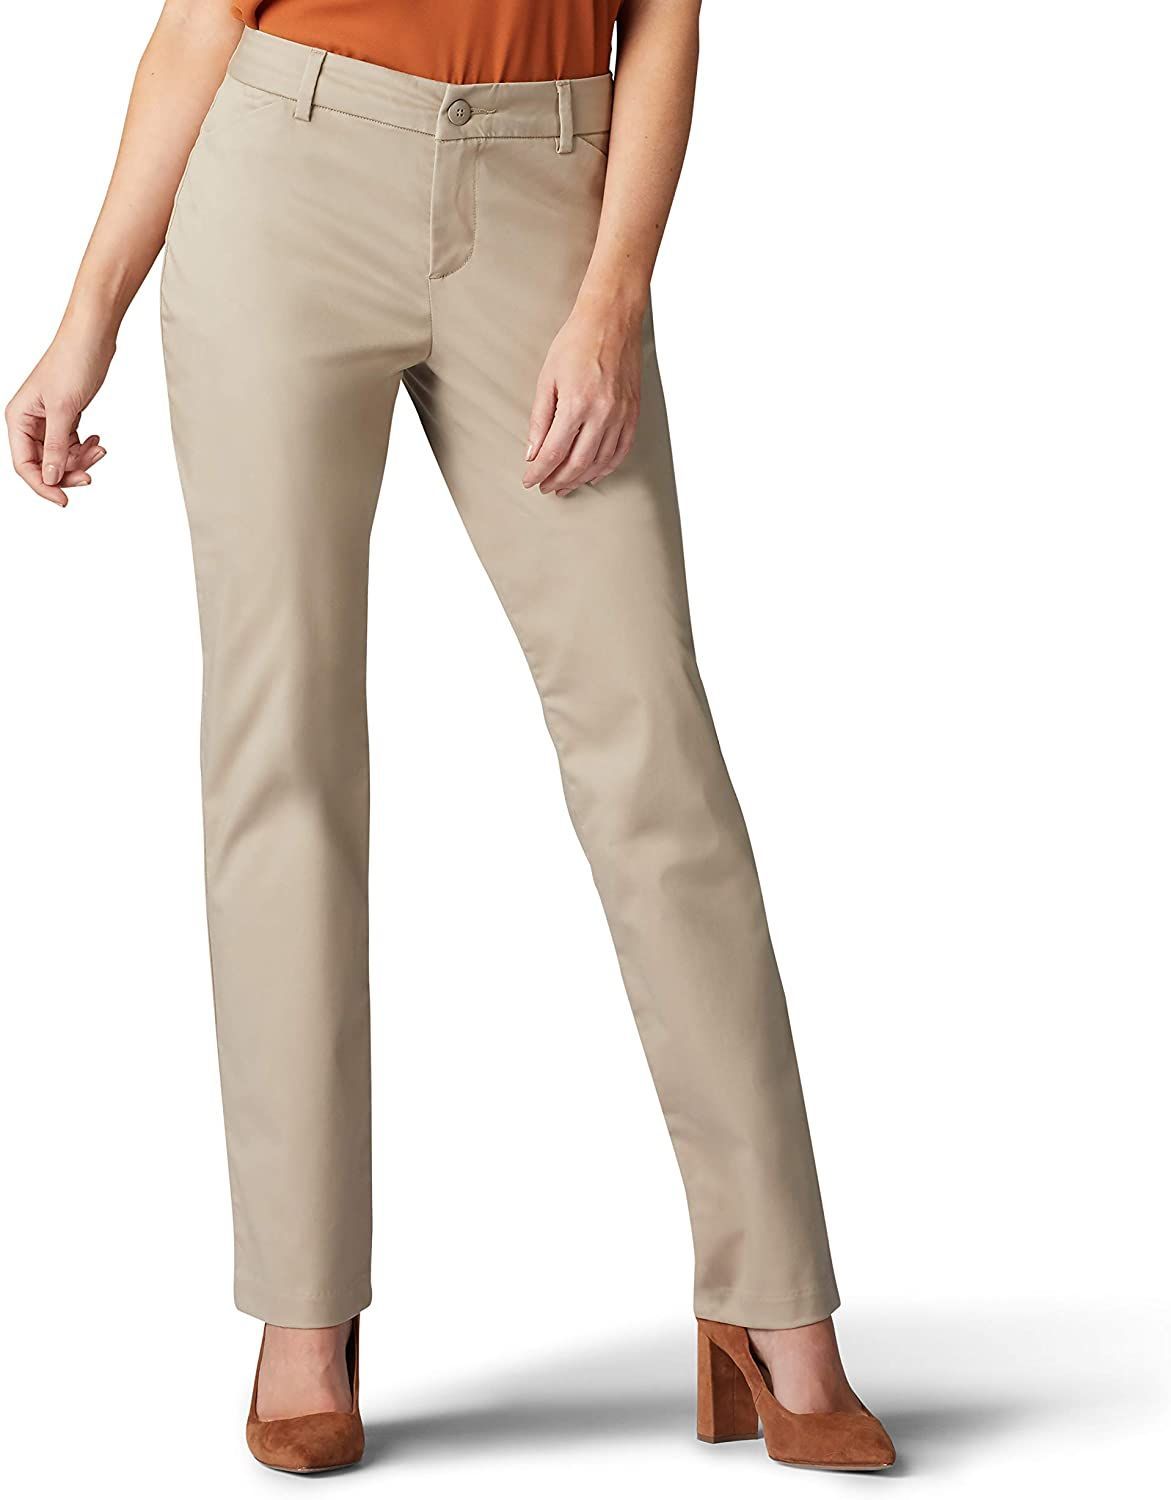 Women High Waist Pockets Skinny Pants Slim Fit Cargo Combat Work Trousers  Bottom | eBay